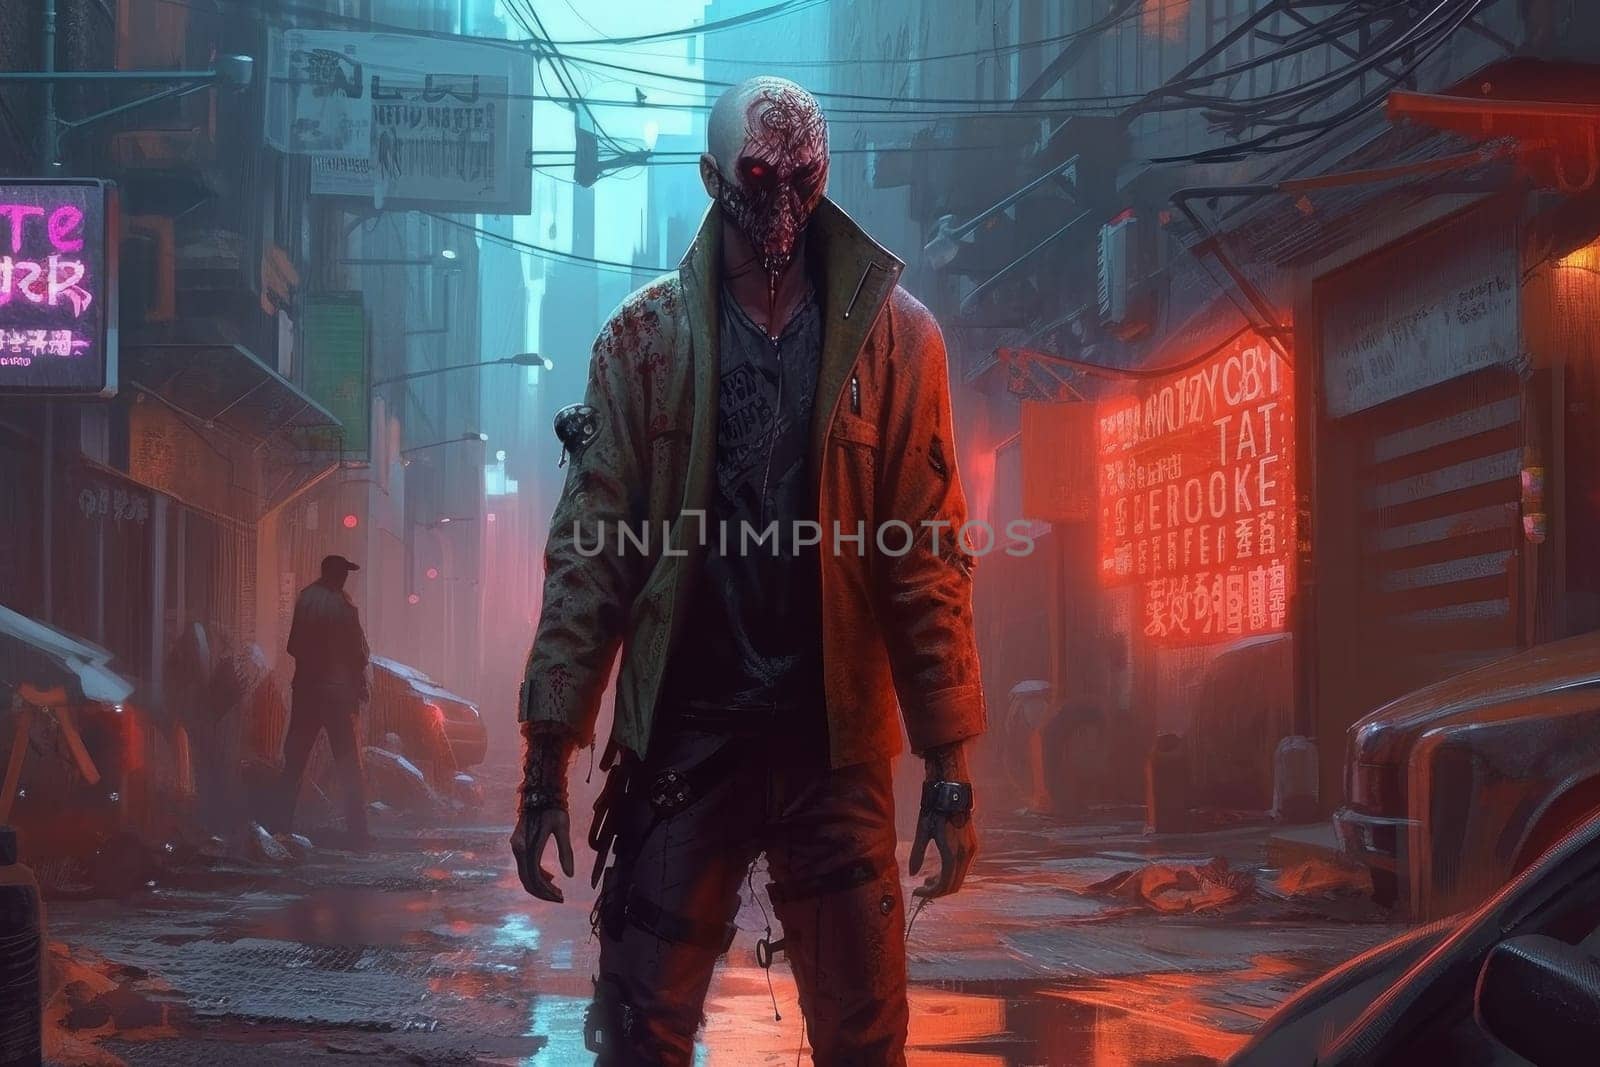 Zombie apocalypse cyberpunk. Scary horror by ylivdesign